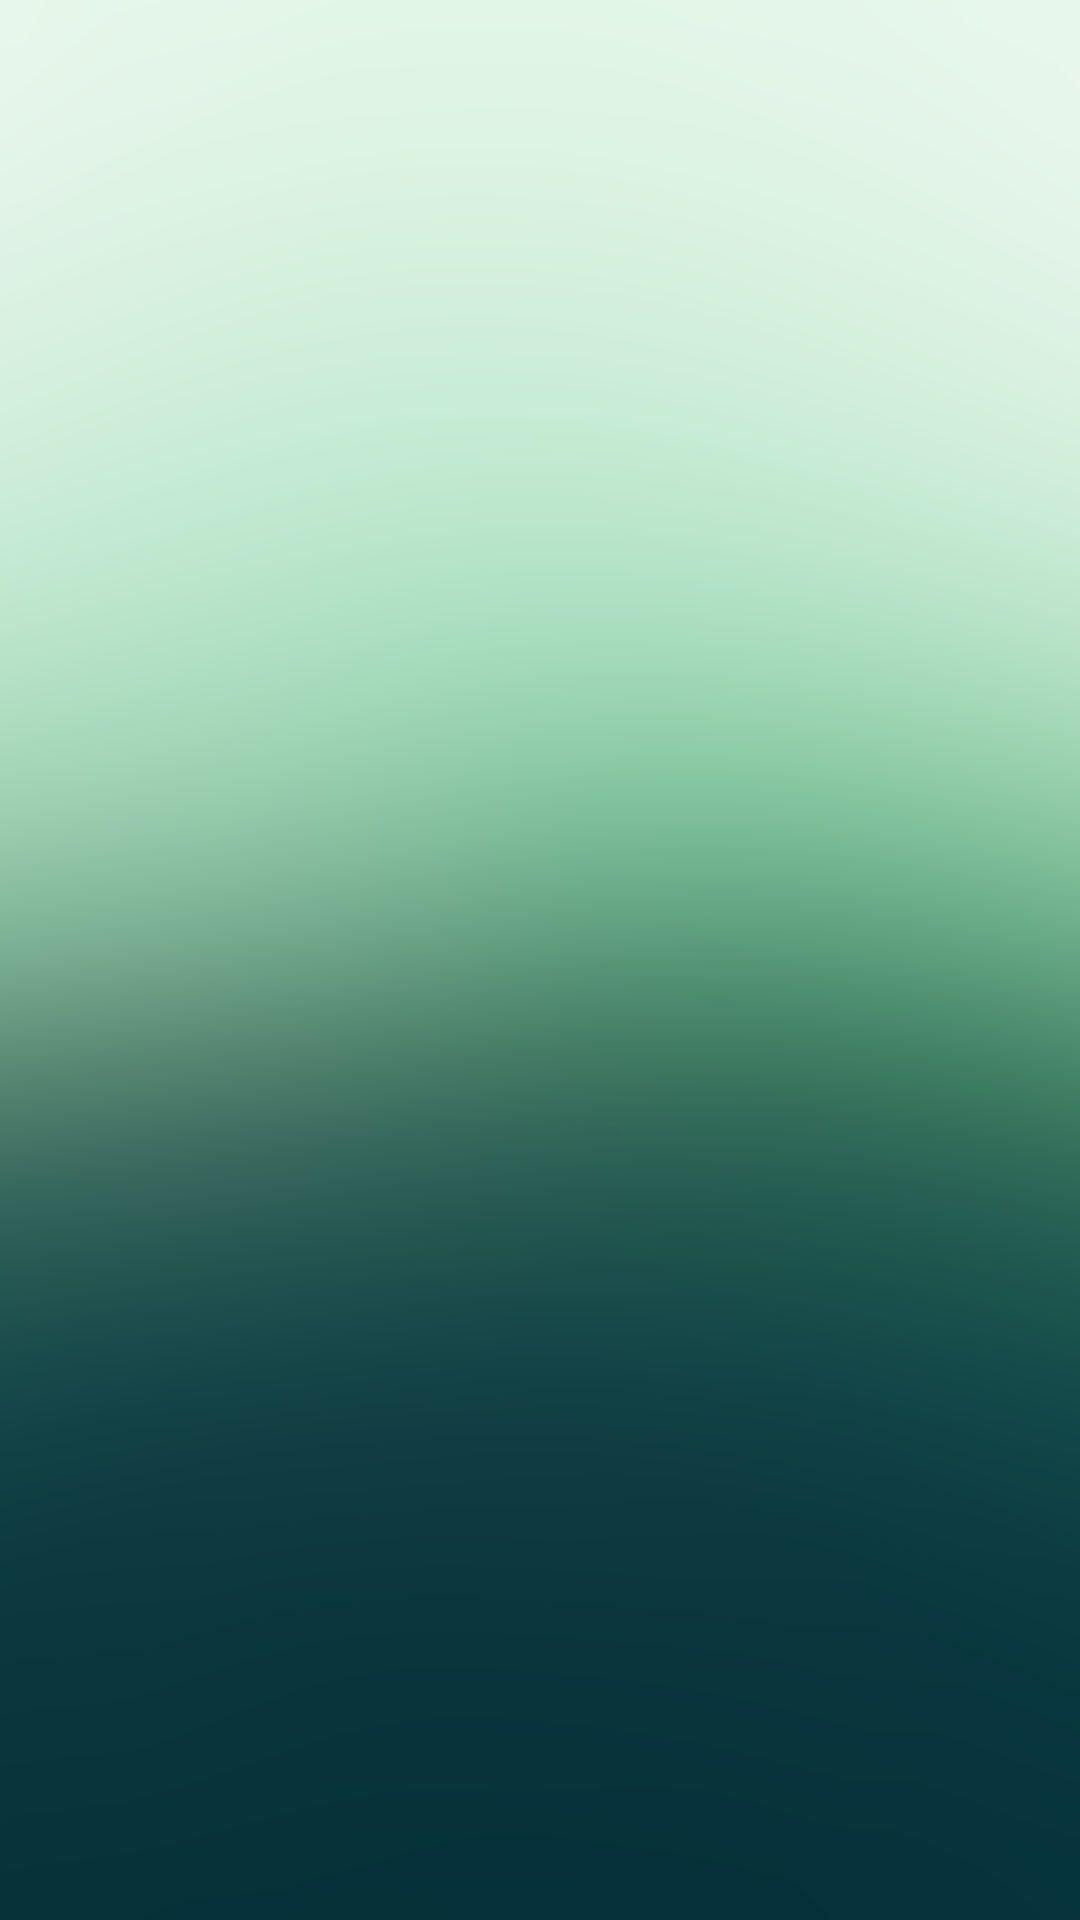 Vertical Dark Green Gradient Android Wallpaper free download